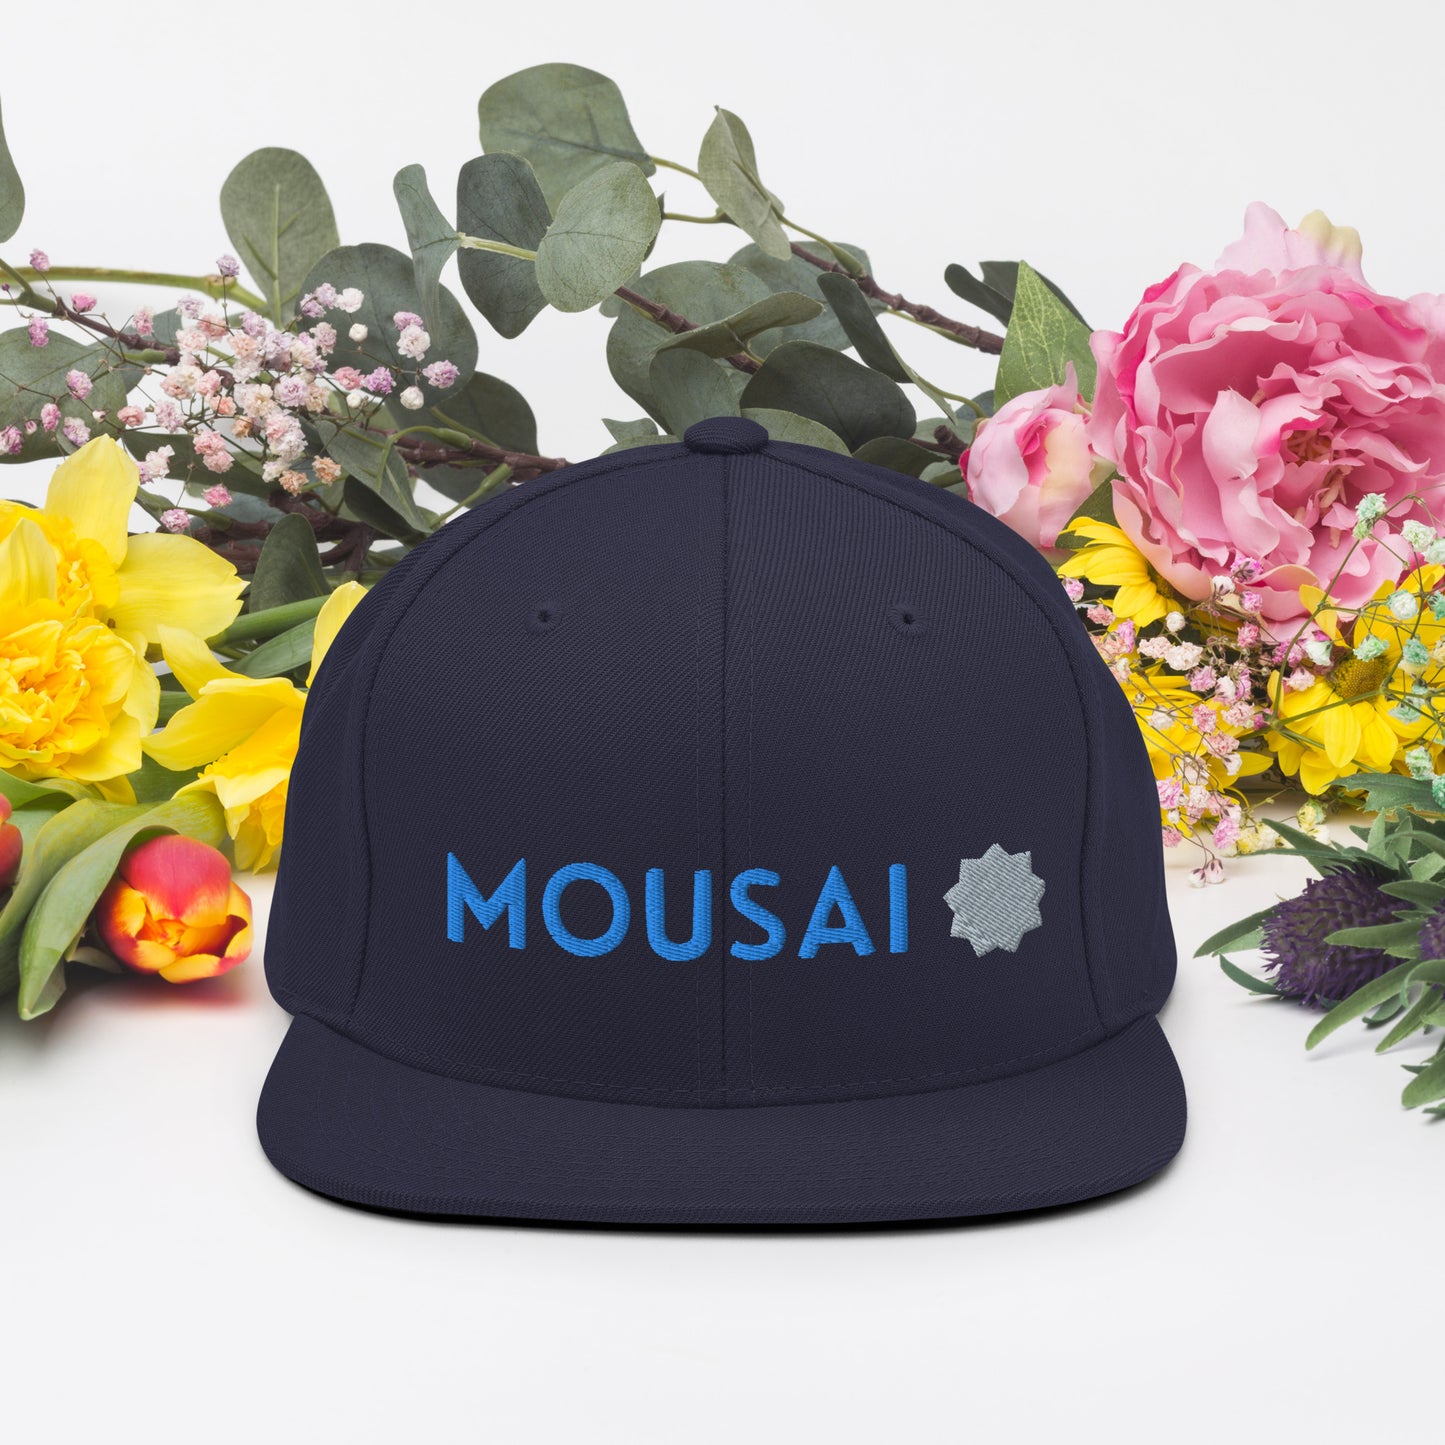 Mousai Snapback Hat